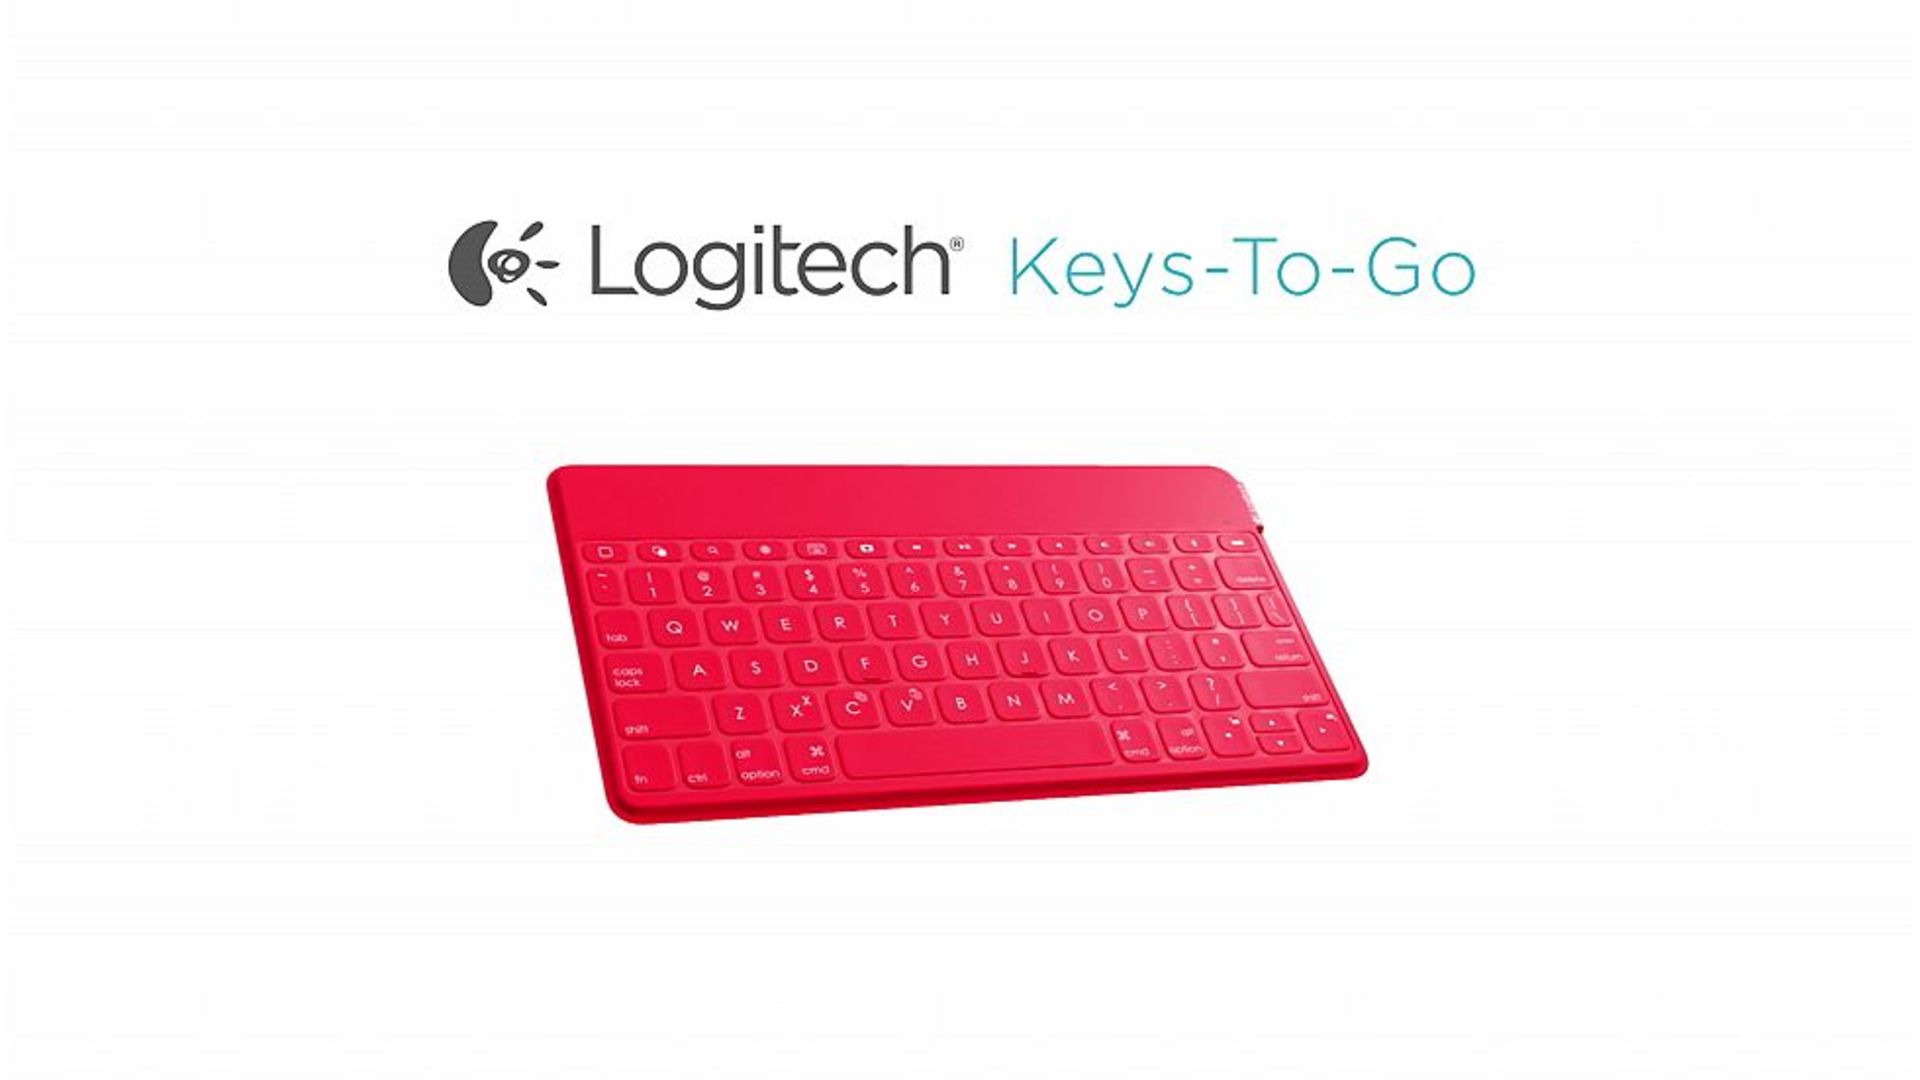 V Brand New Logitech Keys-to-Go Waterproof Wireless Keyboard for iPad iPhone and Apple TV - Wireless